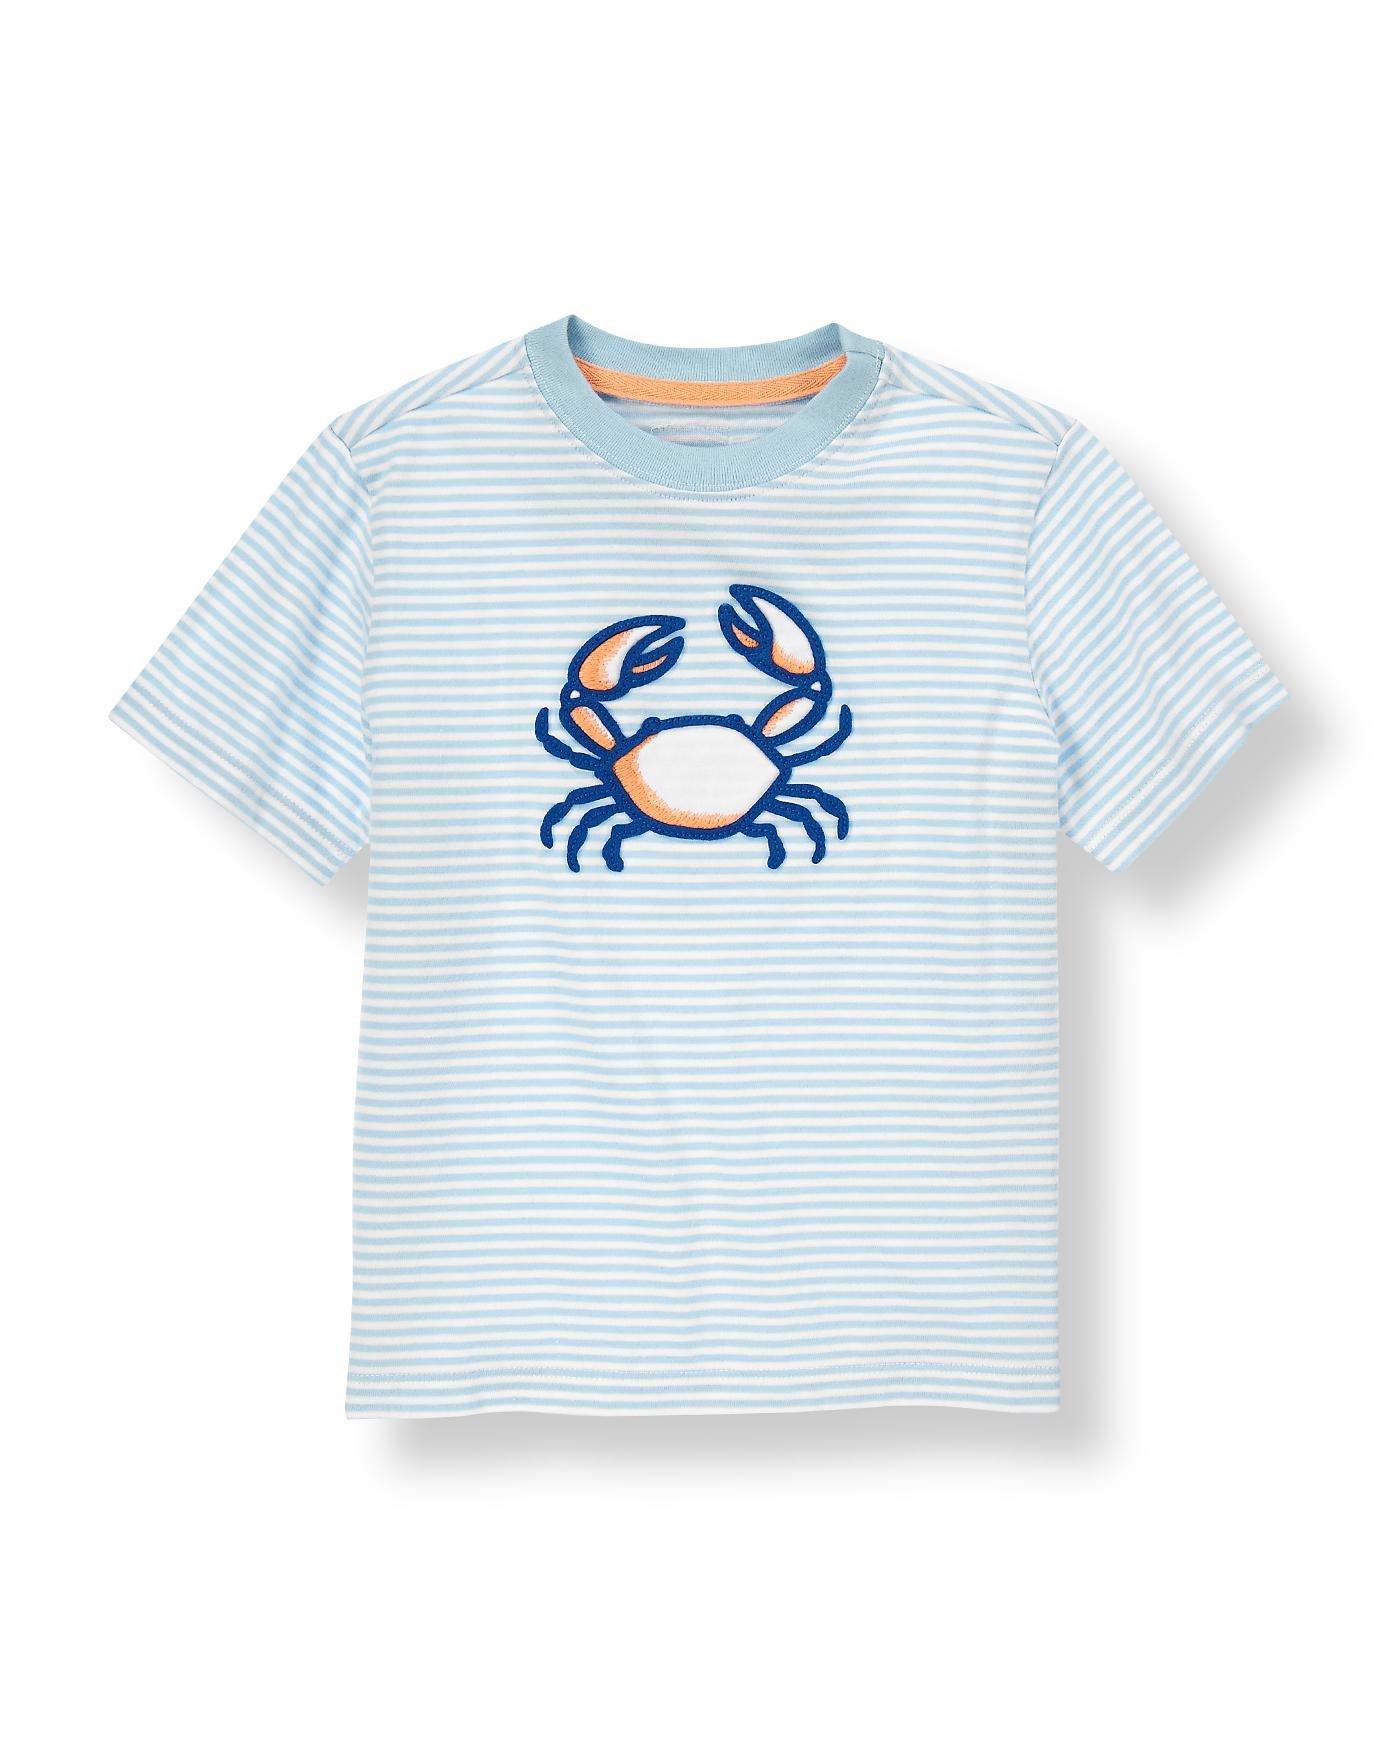 Crab Stripe Tee image number 0